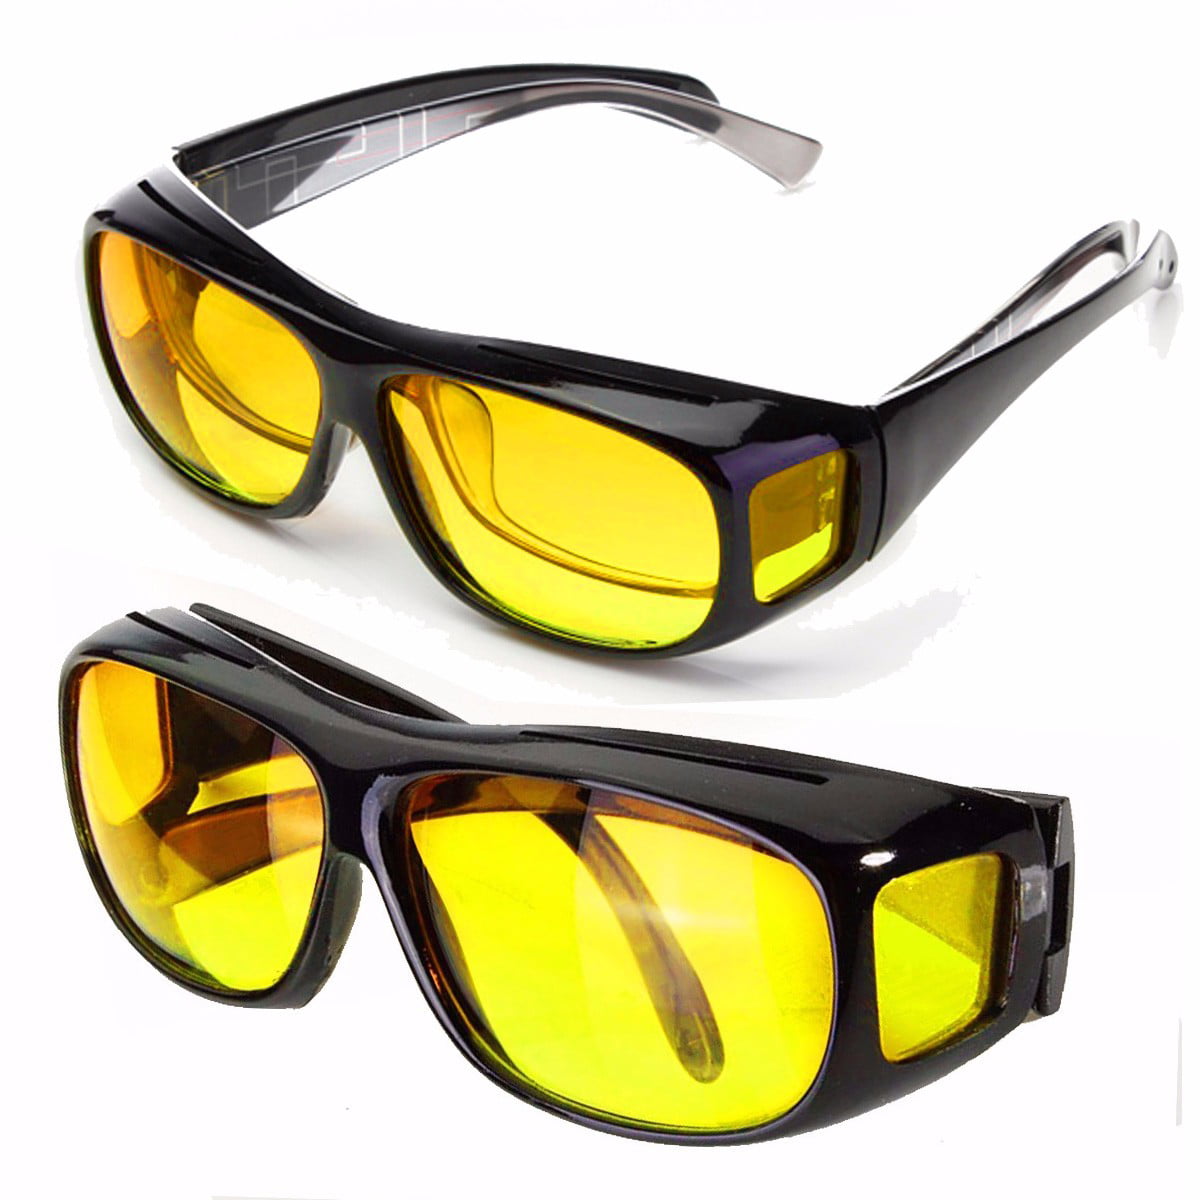 Купить антибликовые очки для автомобиля. Очки AUTOENJOY Profi-Photochromic lf02 g. Леомакс очки антиблик. Антифары Polarized Sport.